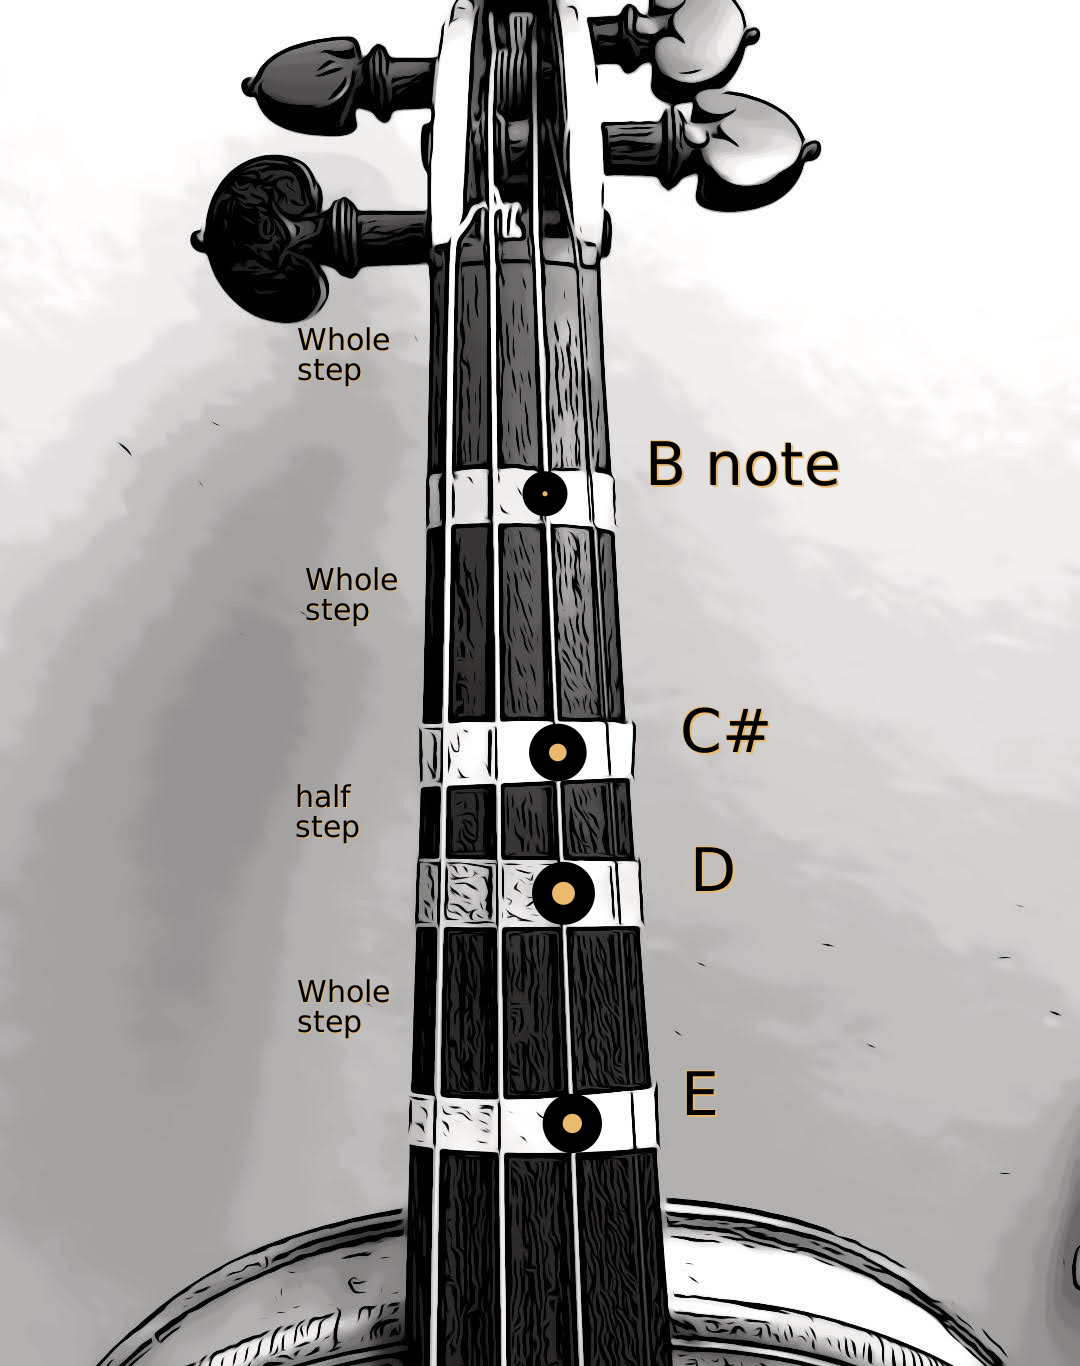 violin note chart inverted for left handed